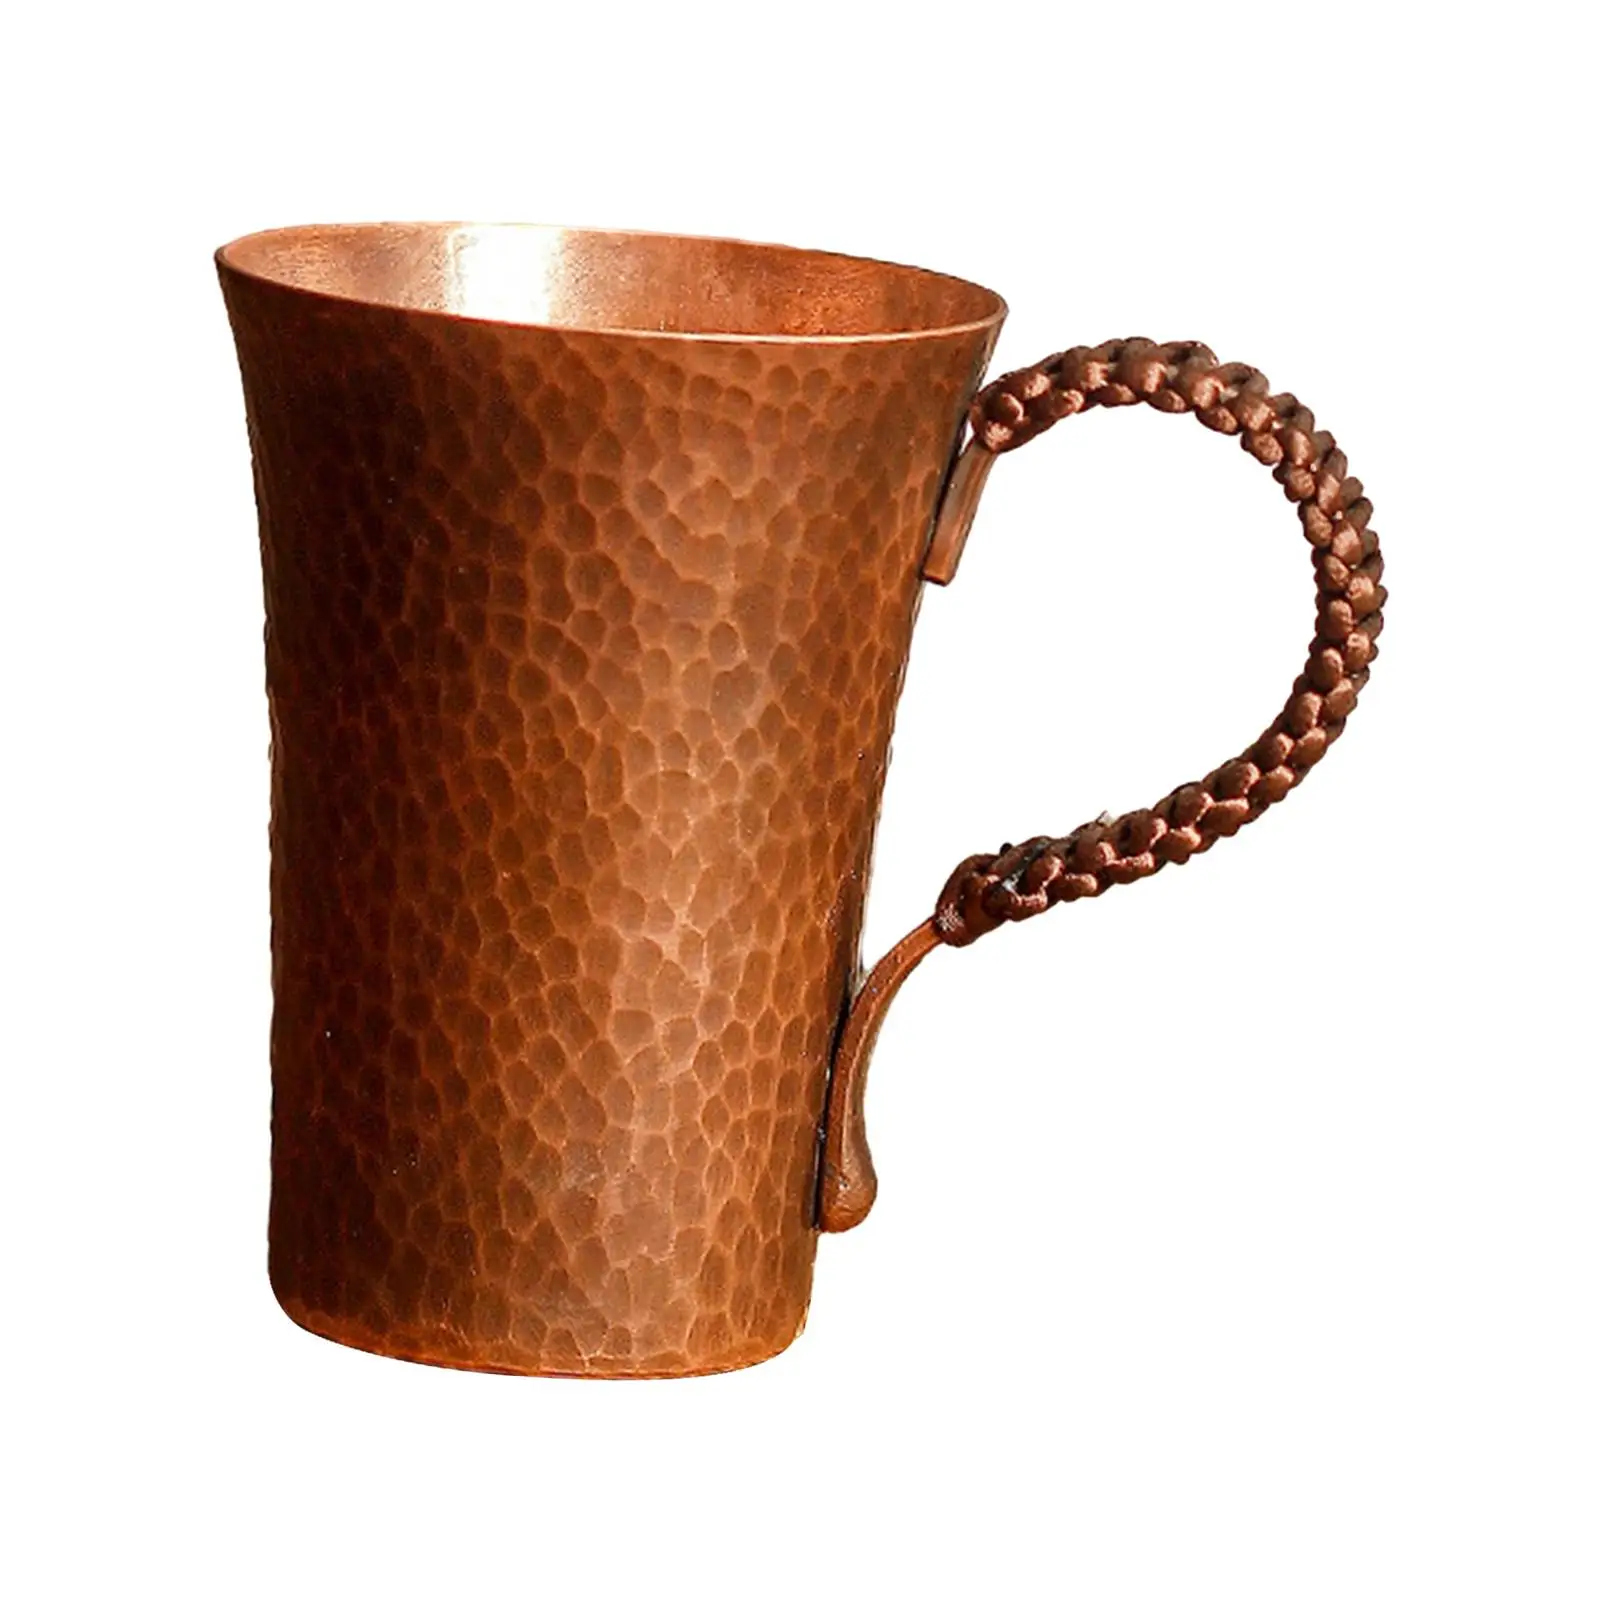 Turkish Copper Mug with Handle 300 ml Hammered Beer Mug Water Mug for Cold Drinks Masrapa Cup for Home Kitchen Bar Teaware Cafe